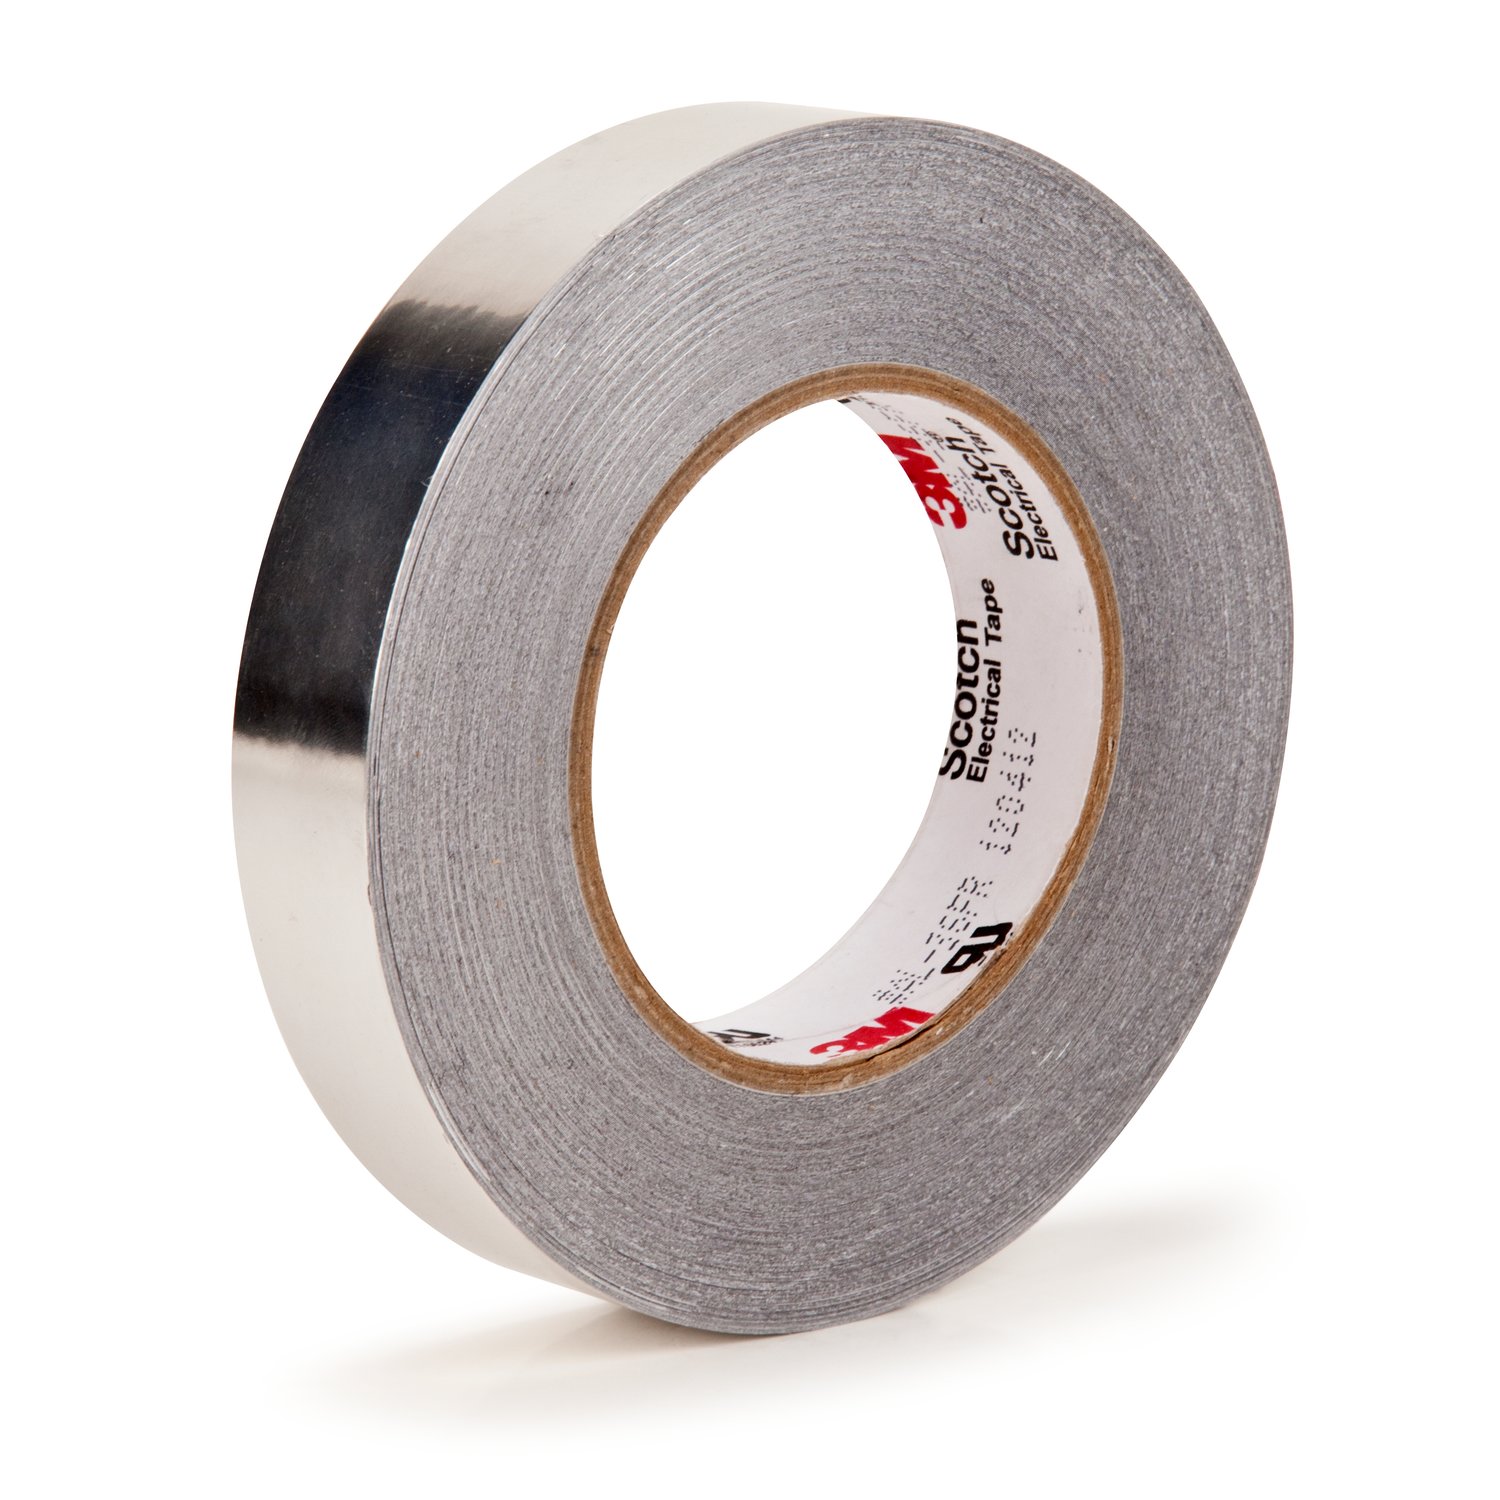 7100197910 - 3M Laminated Aluminum Foil EMI Shielding Tape AL-36FR, 3/4 x 54.5 yd,
12 Rolls/Case